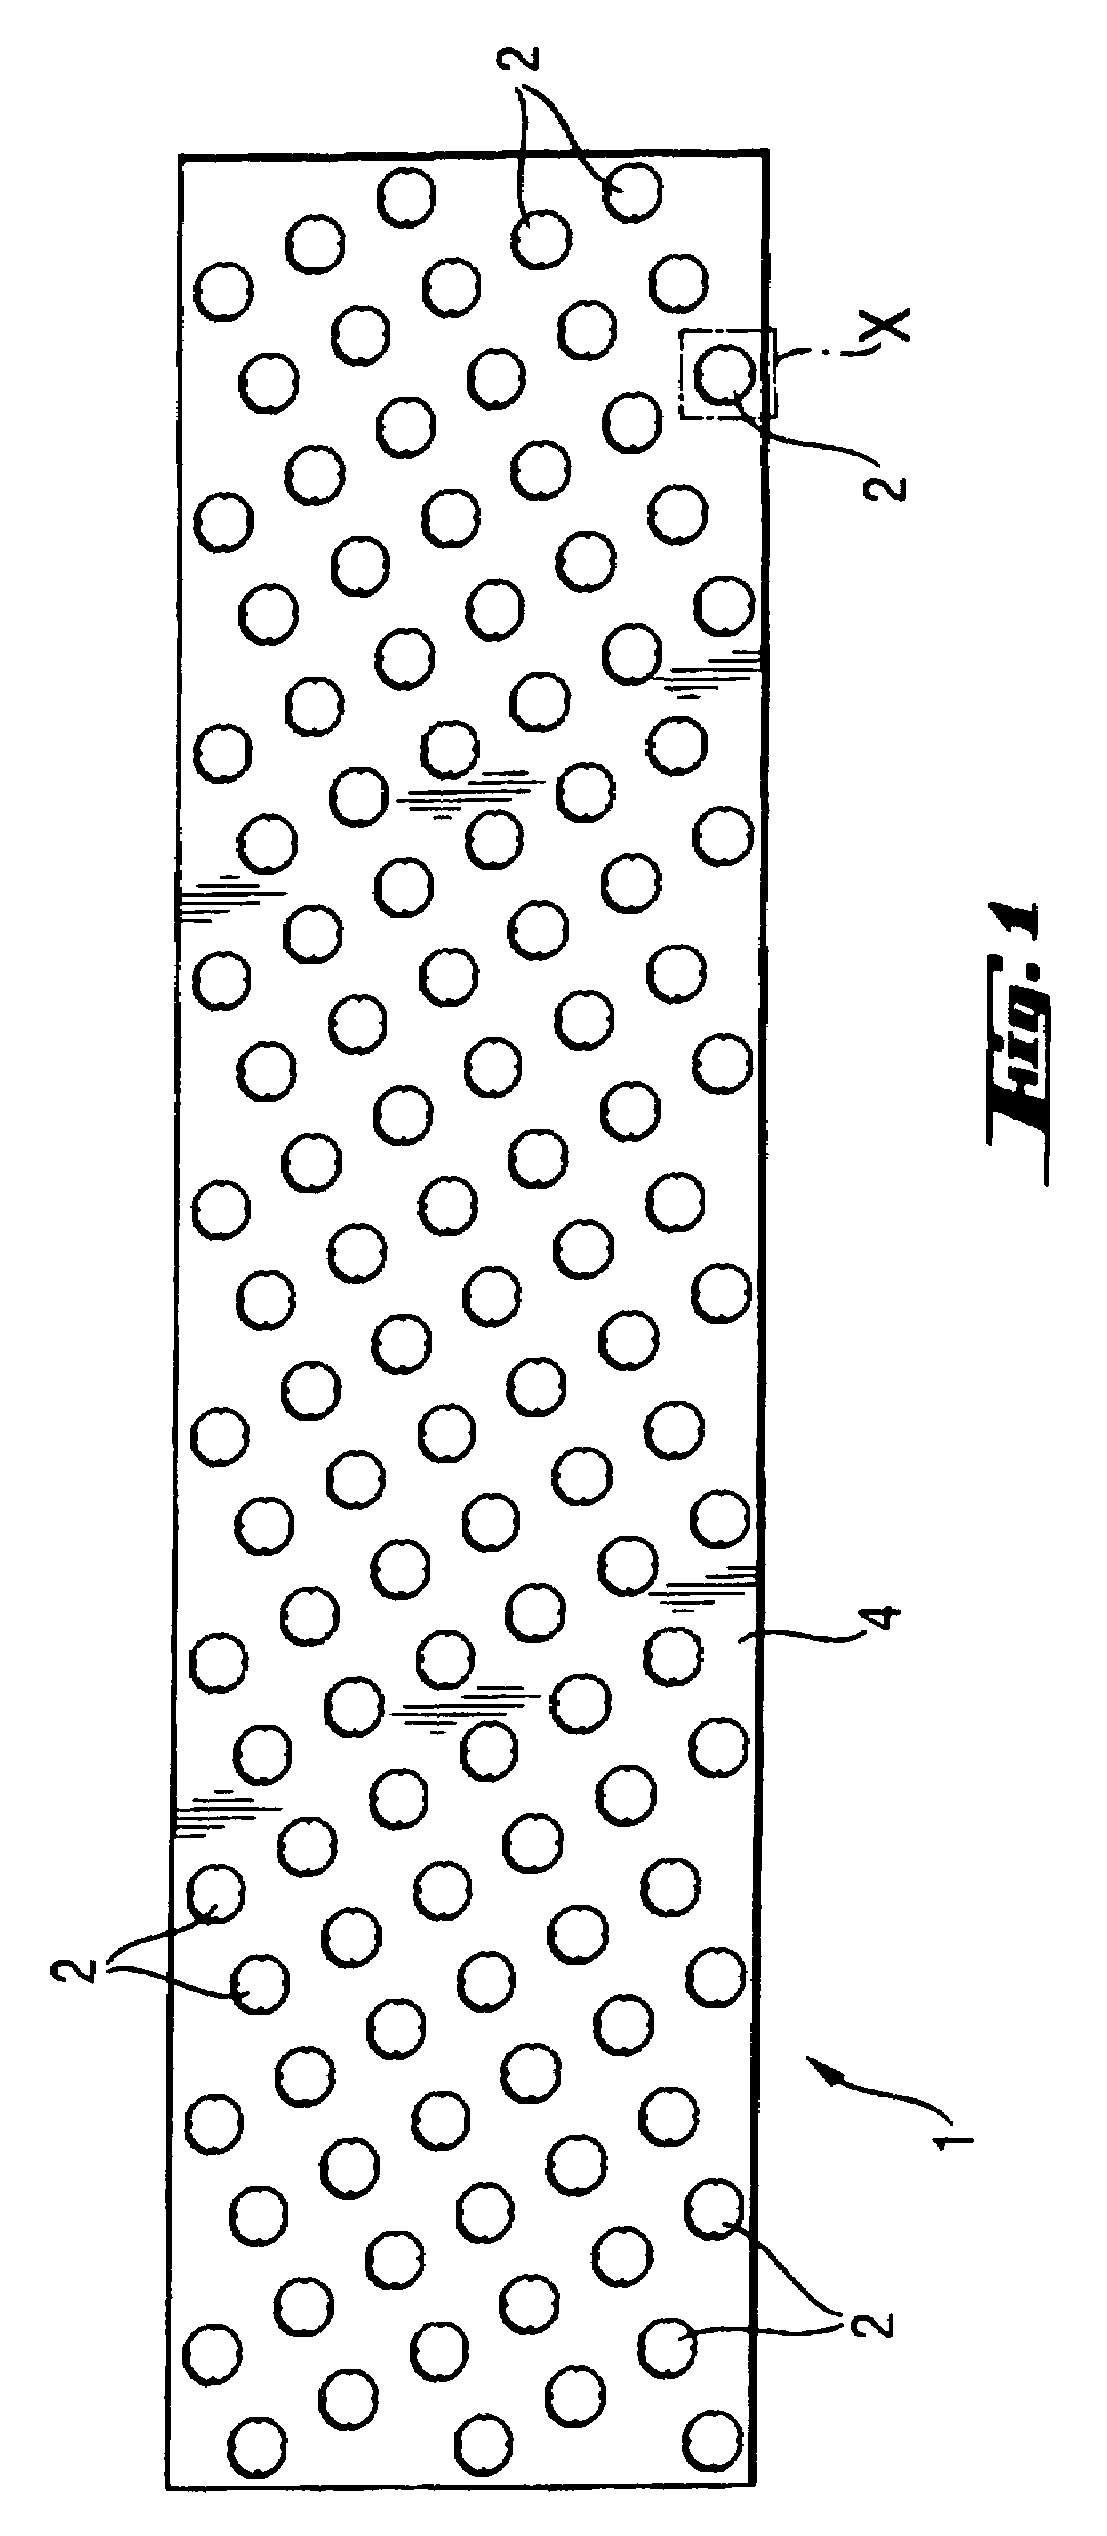 Plain bearing element and method of producing a wrapped plain bearing bushing